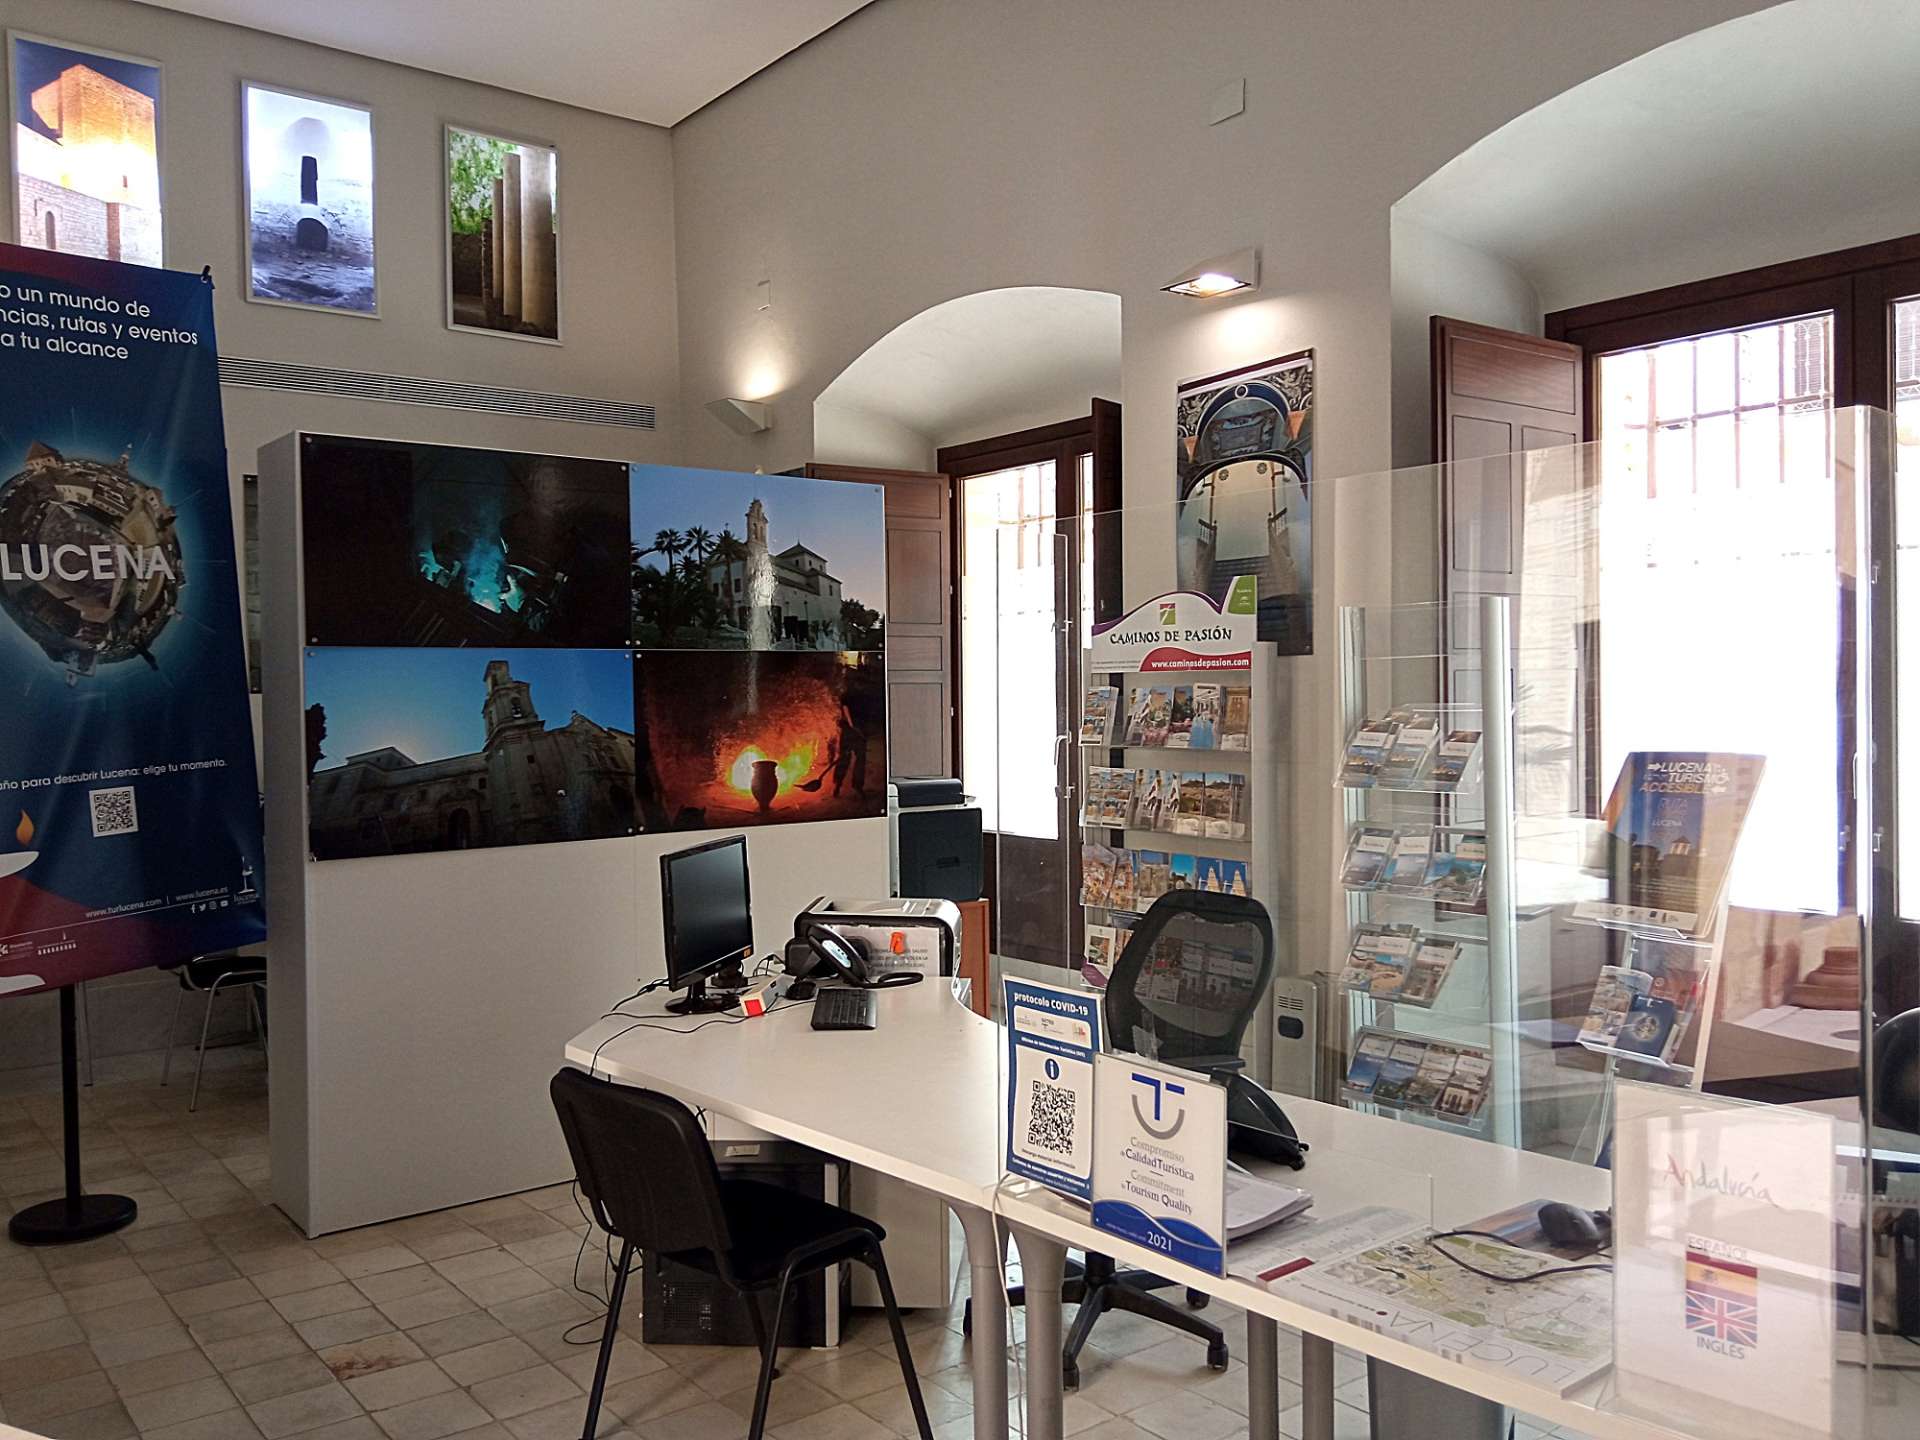 Tourist Office of Lucena